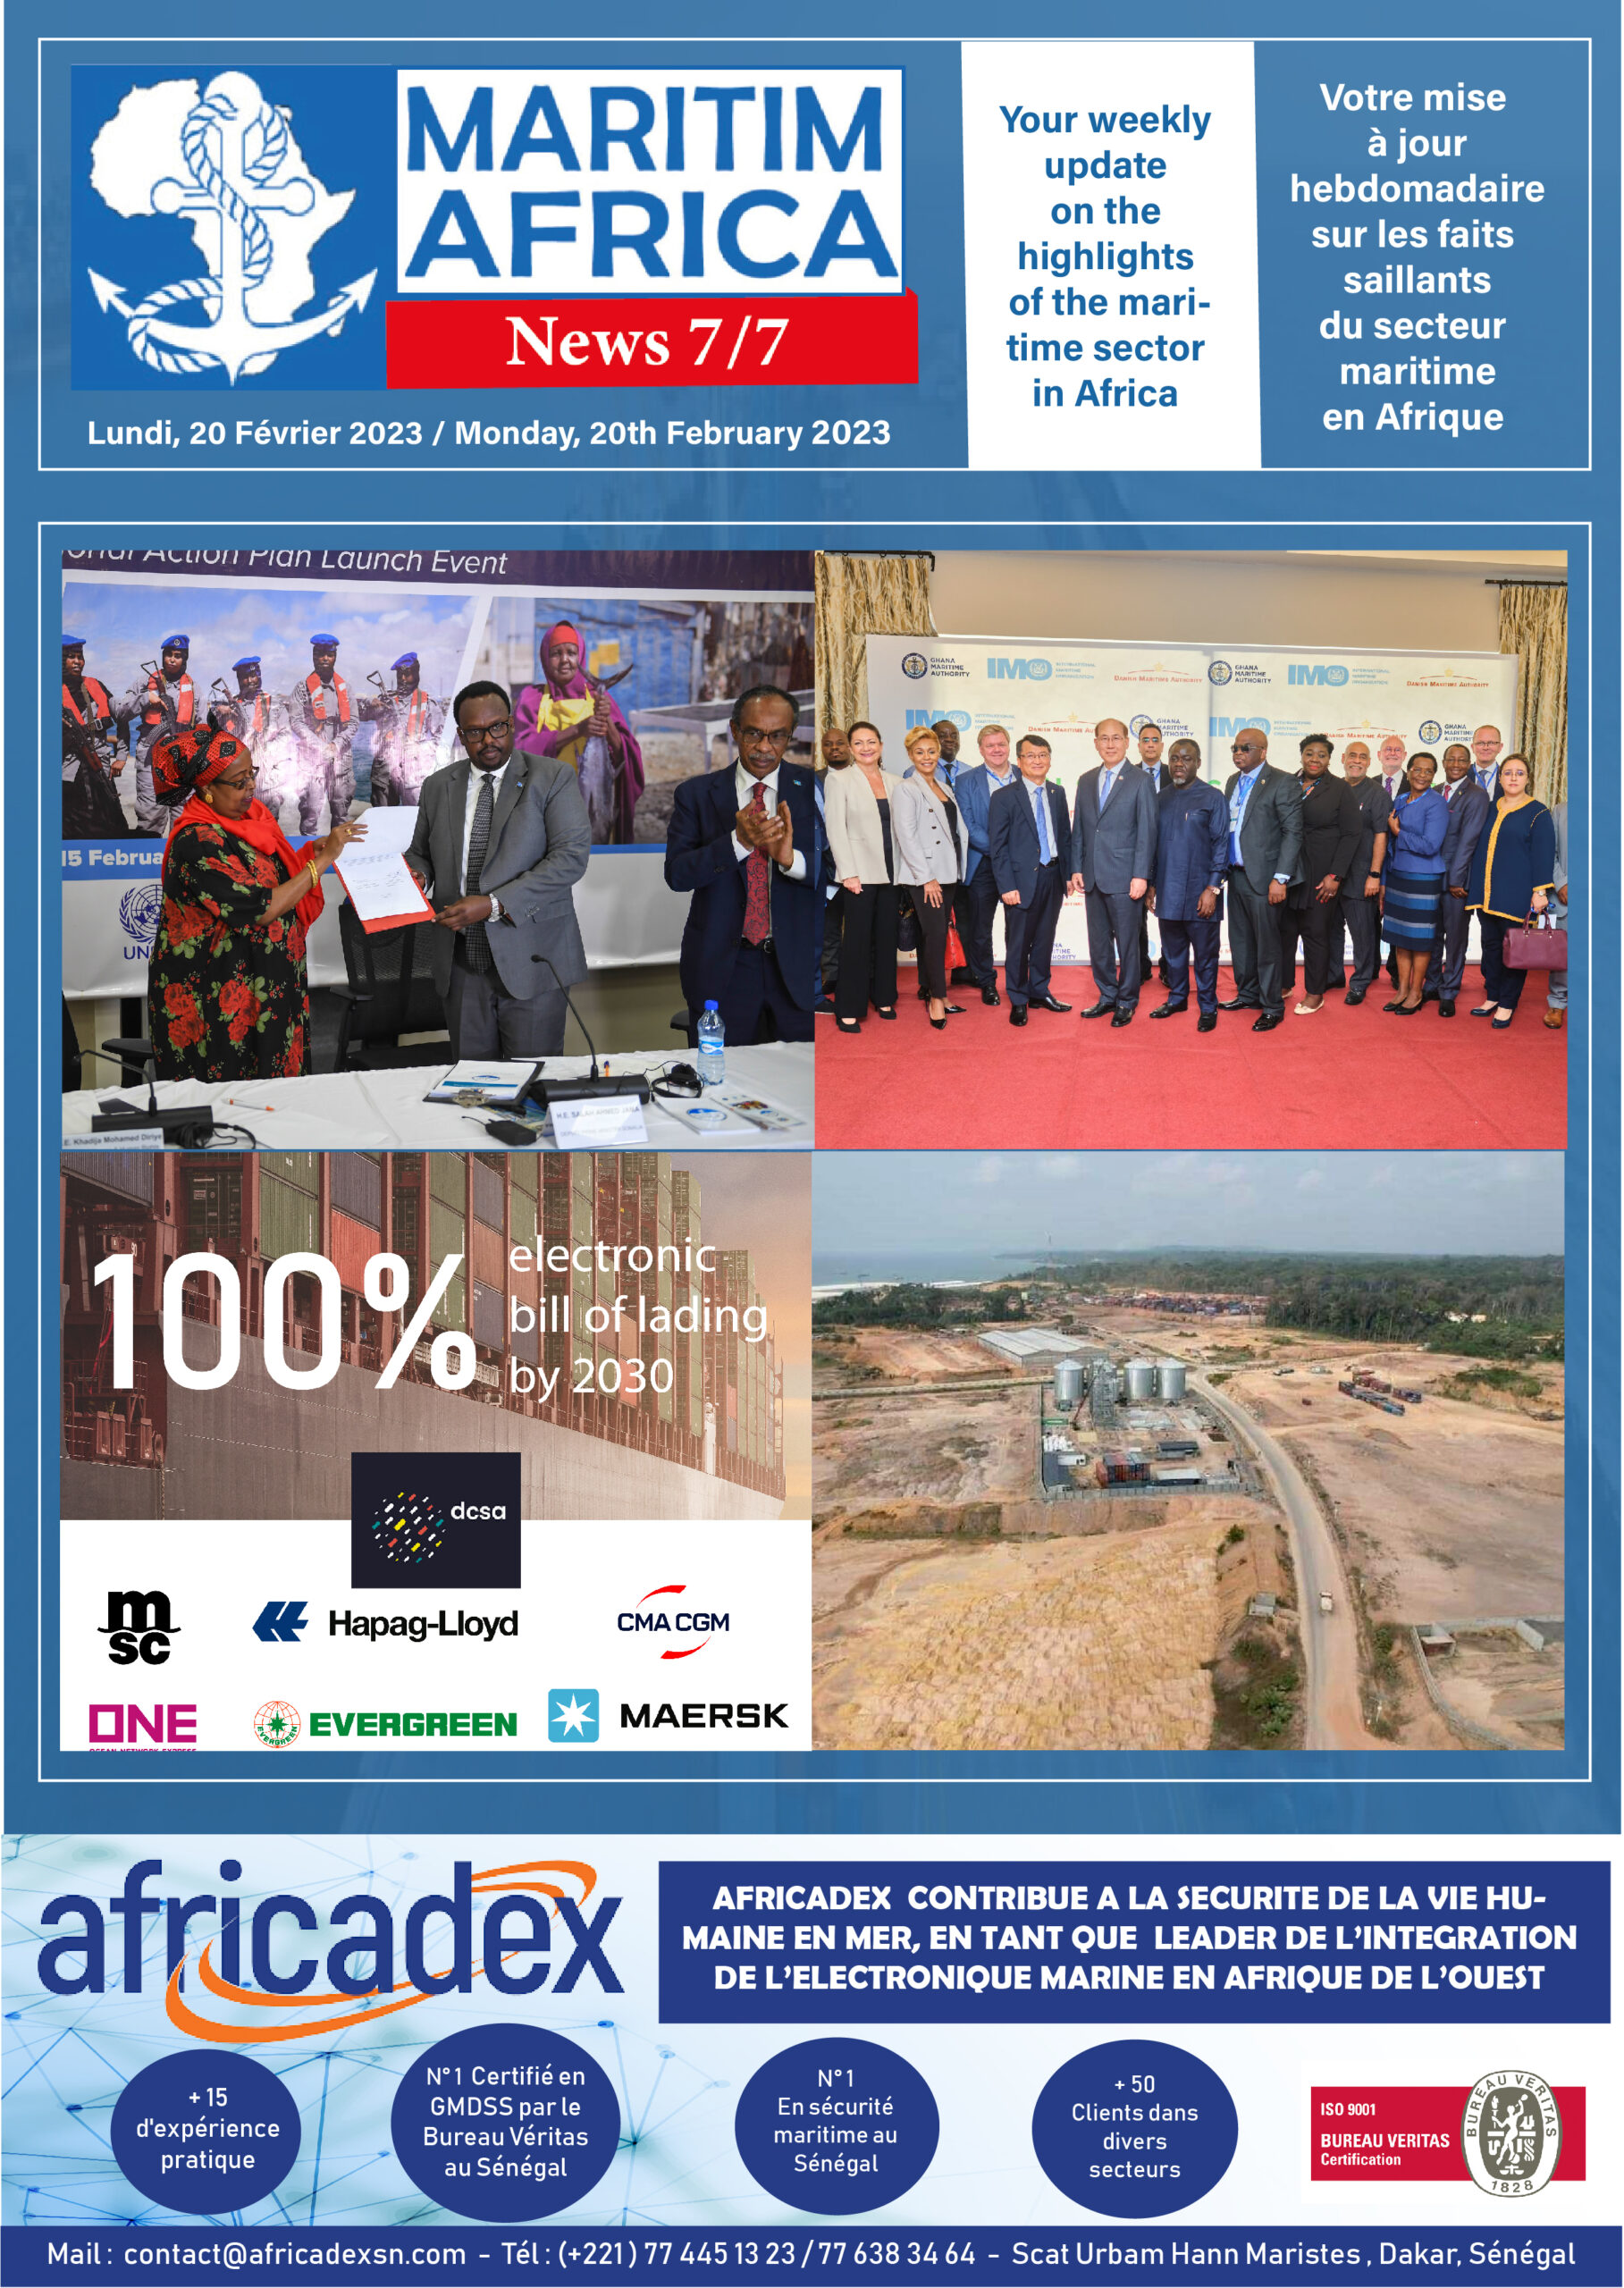 Maritimafrica News 7/7 (Week of 13 – 19 february 2023)